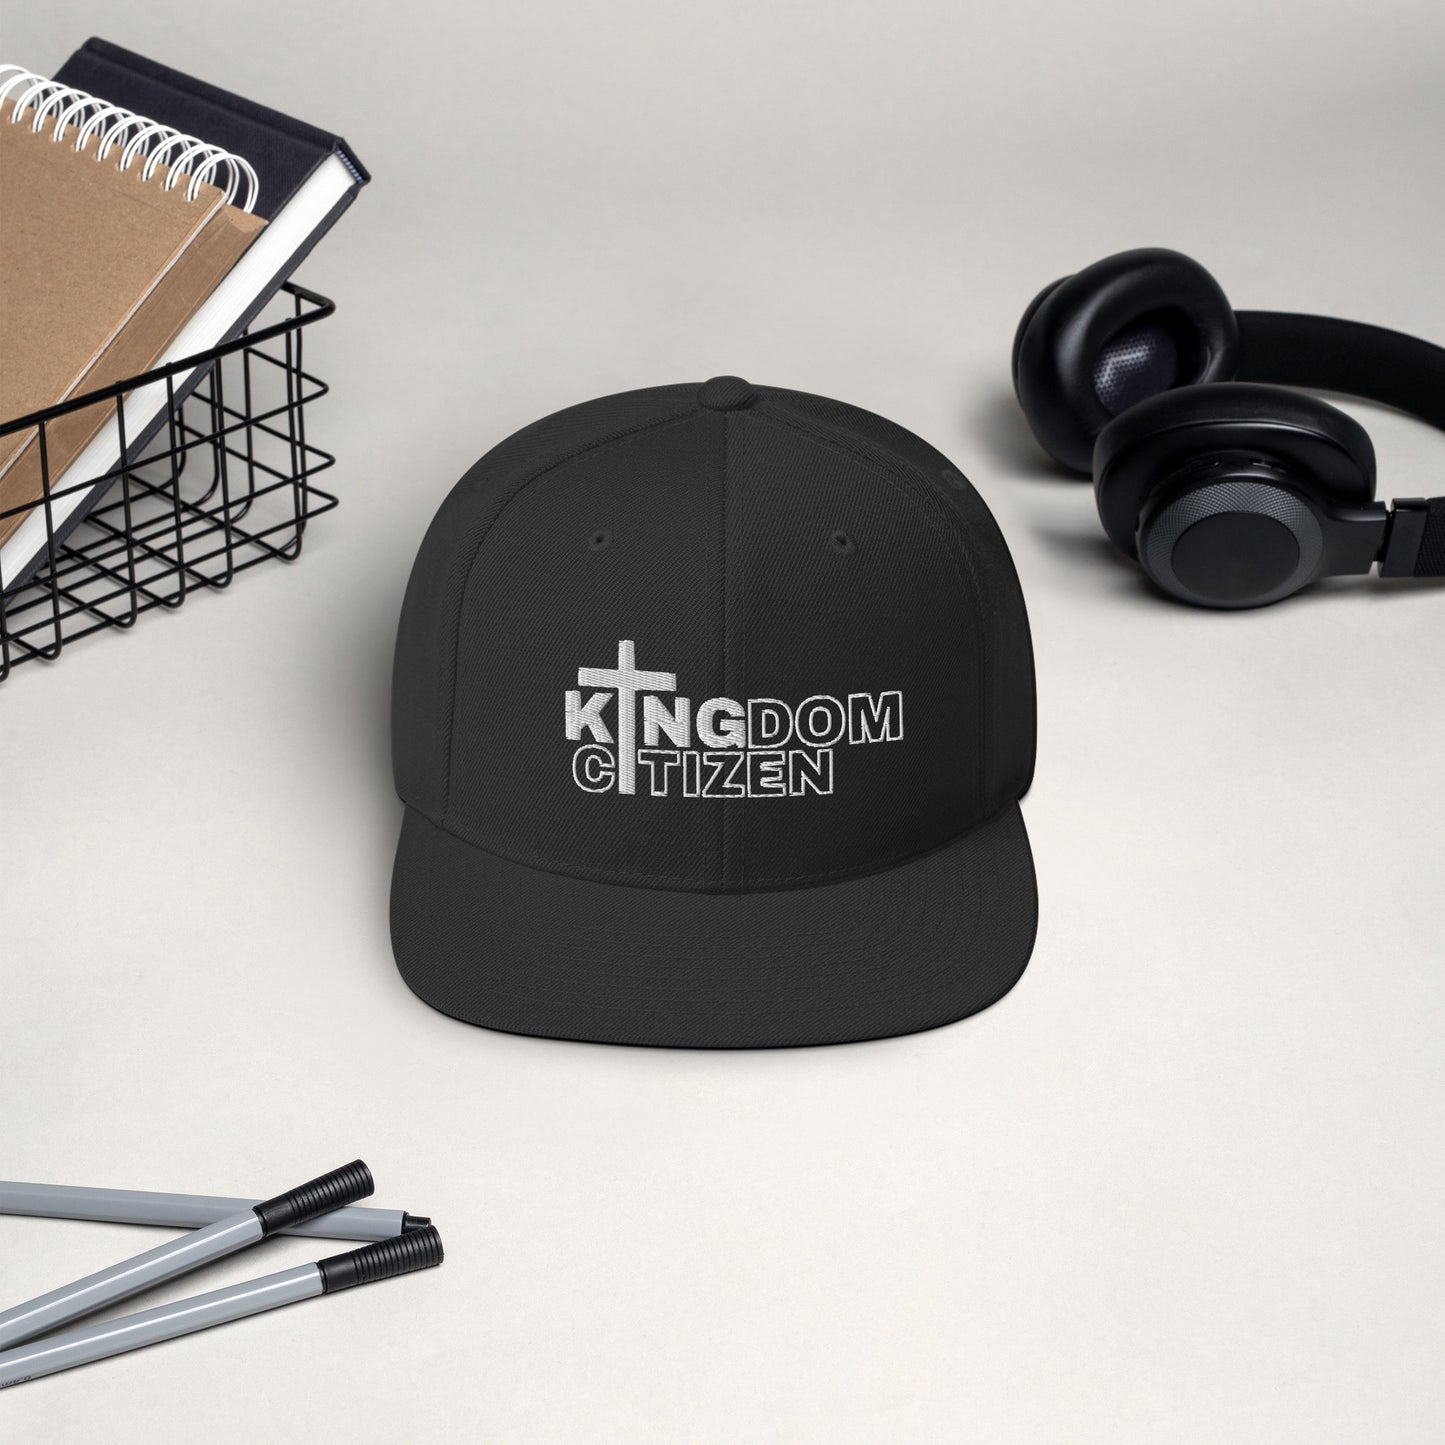 Kingdom Citizen - Snapback Hat - Dark colors